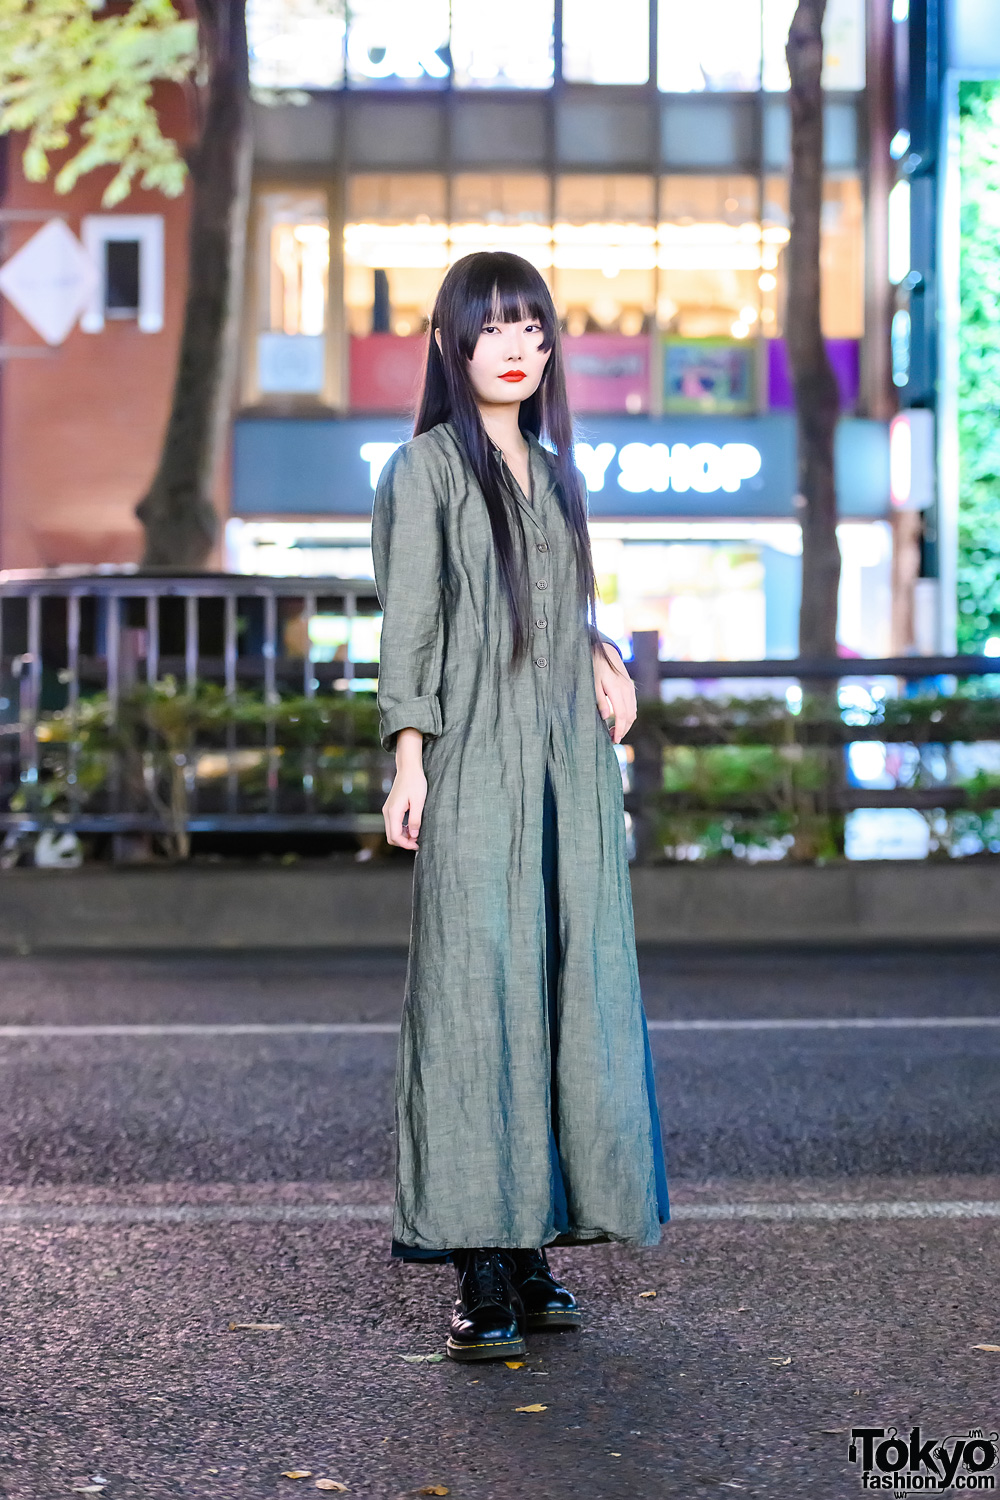 Minimalist Japanese Street Fashion w/ Long Black Hair Style, Vintage